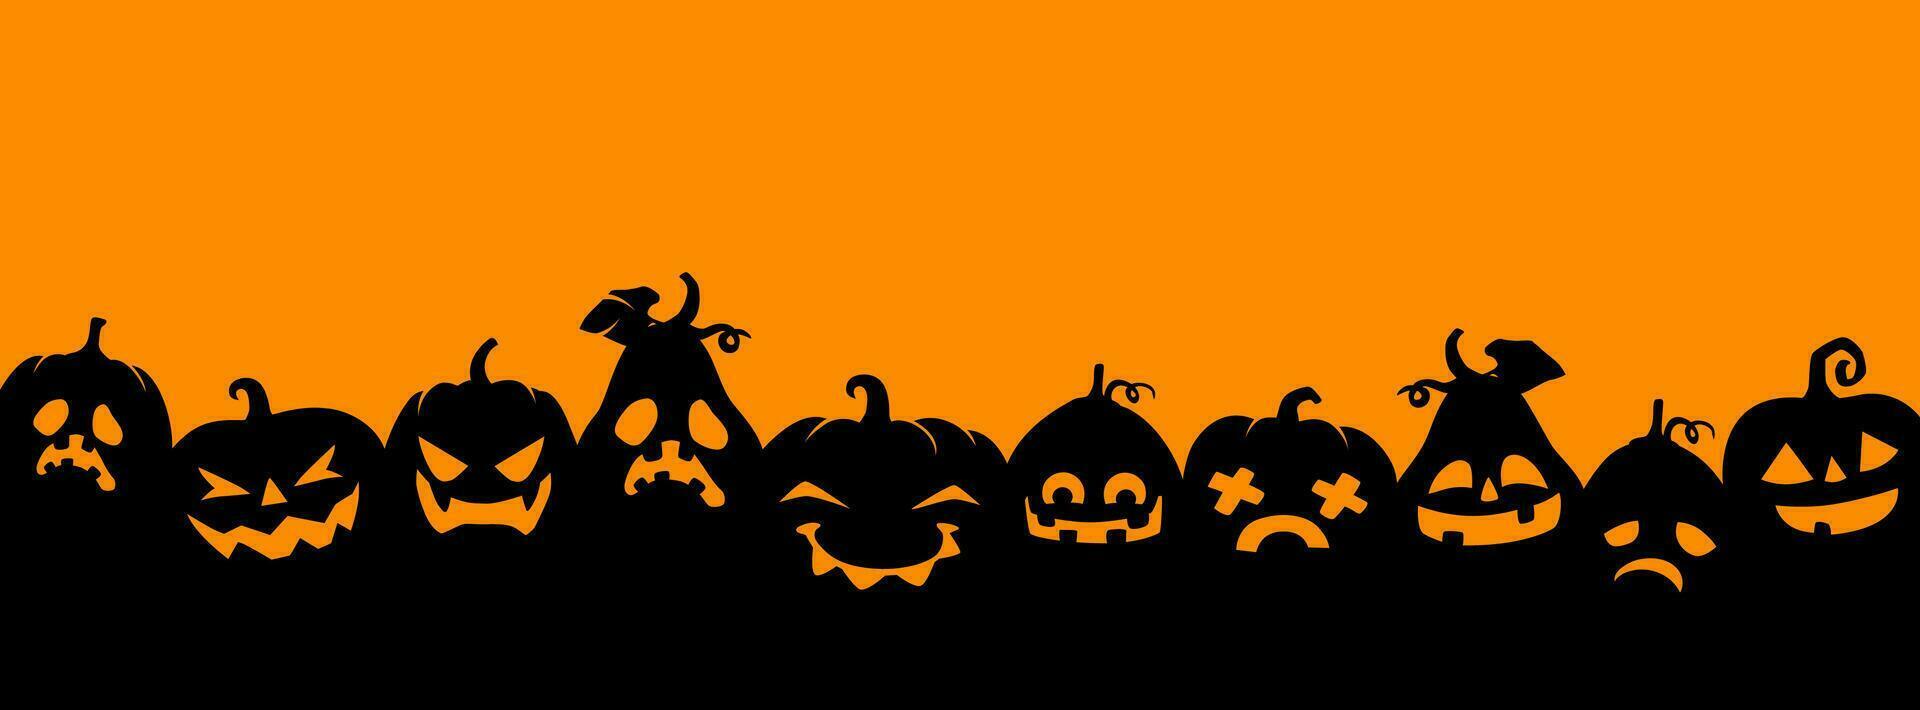 Halloween pumpkin silhouettes panorama background vector